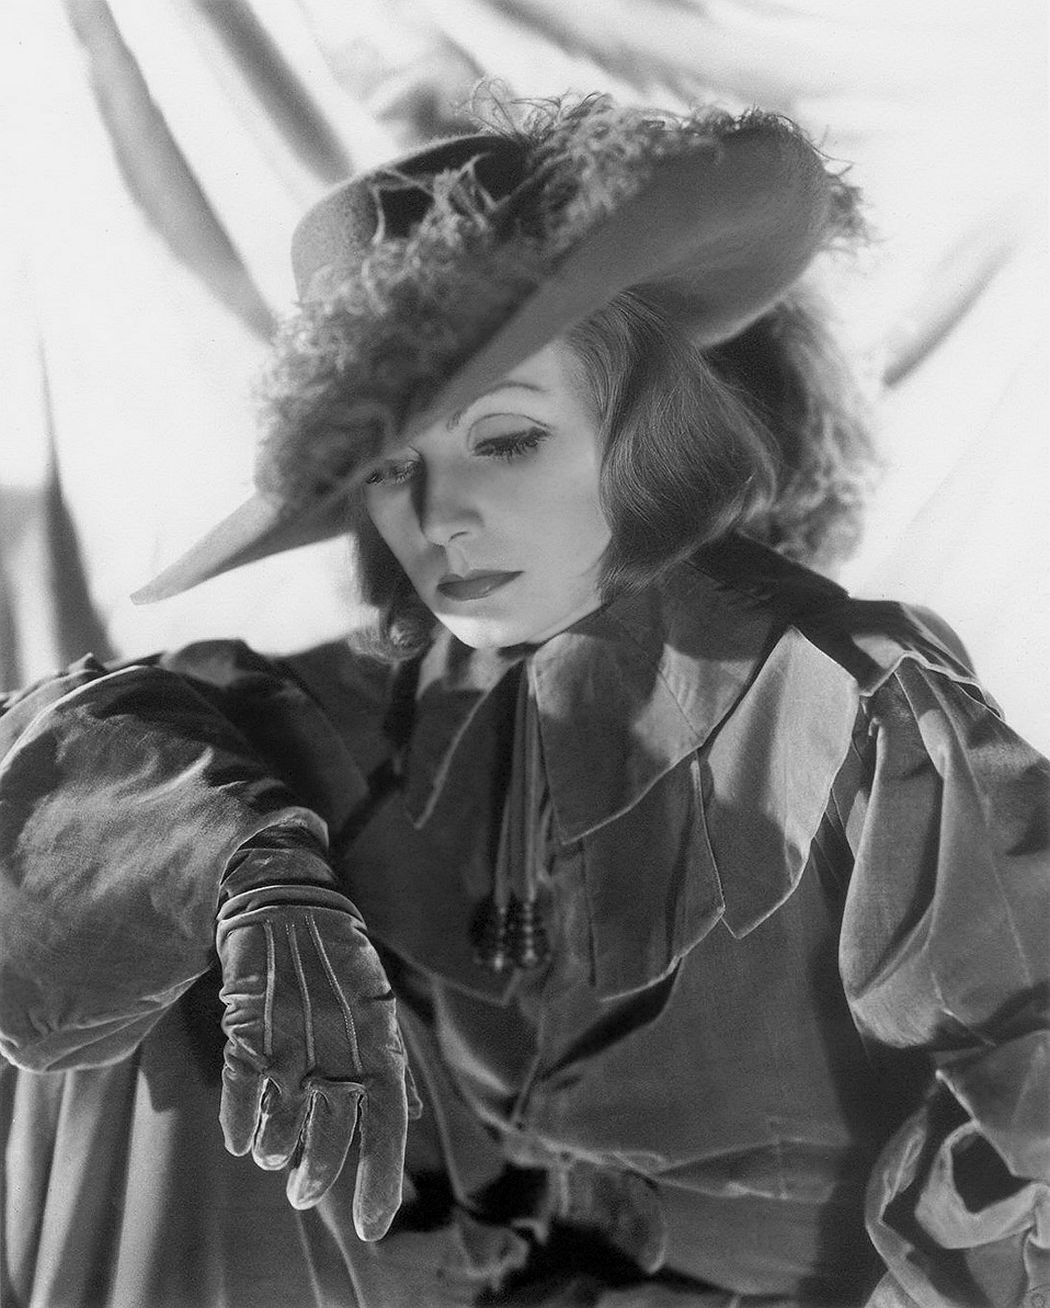 Queen Christina (1933)